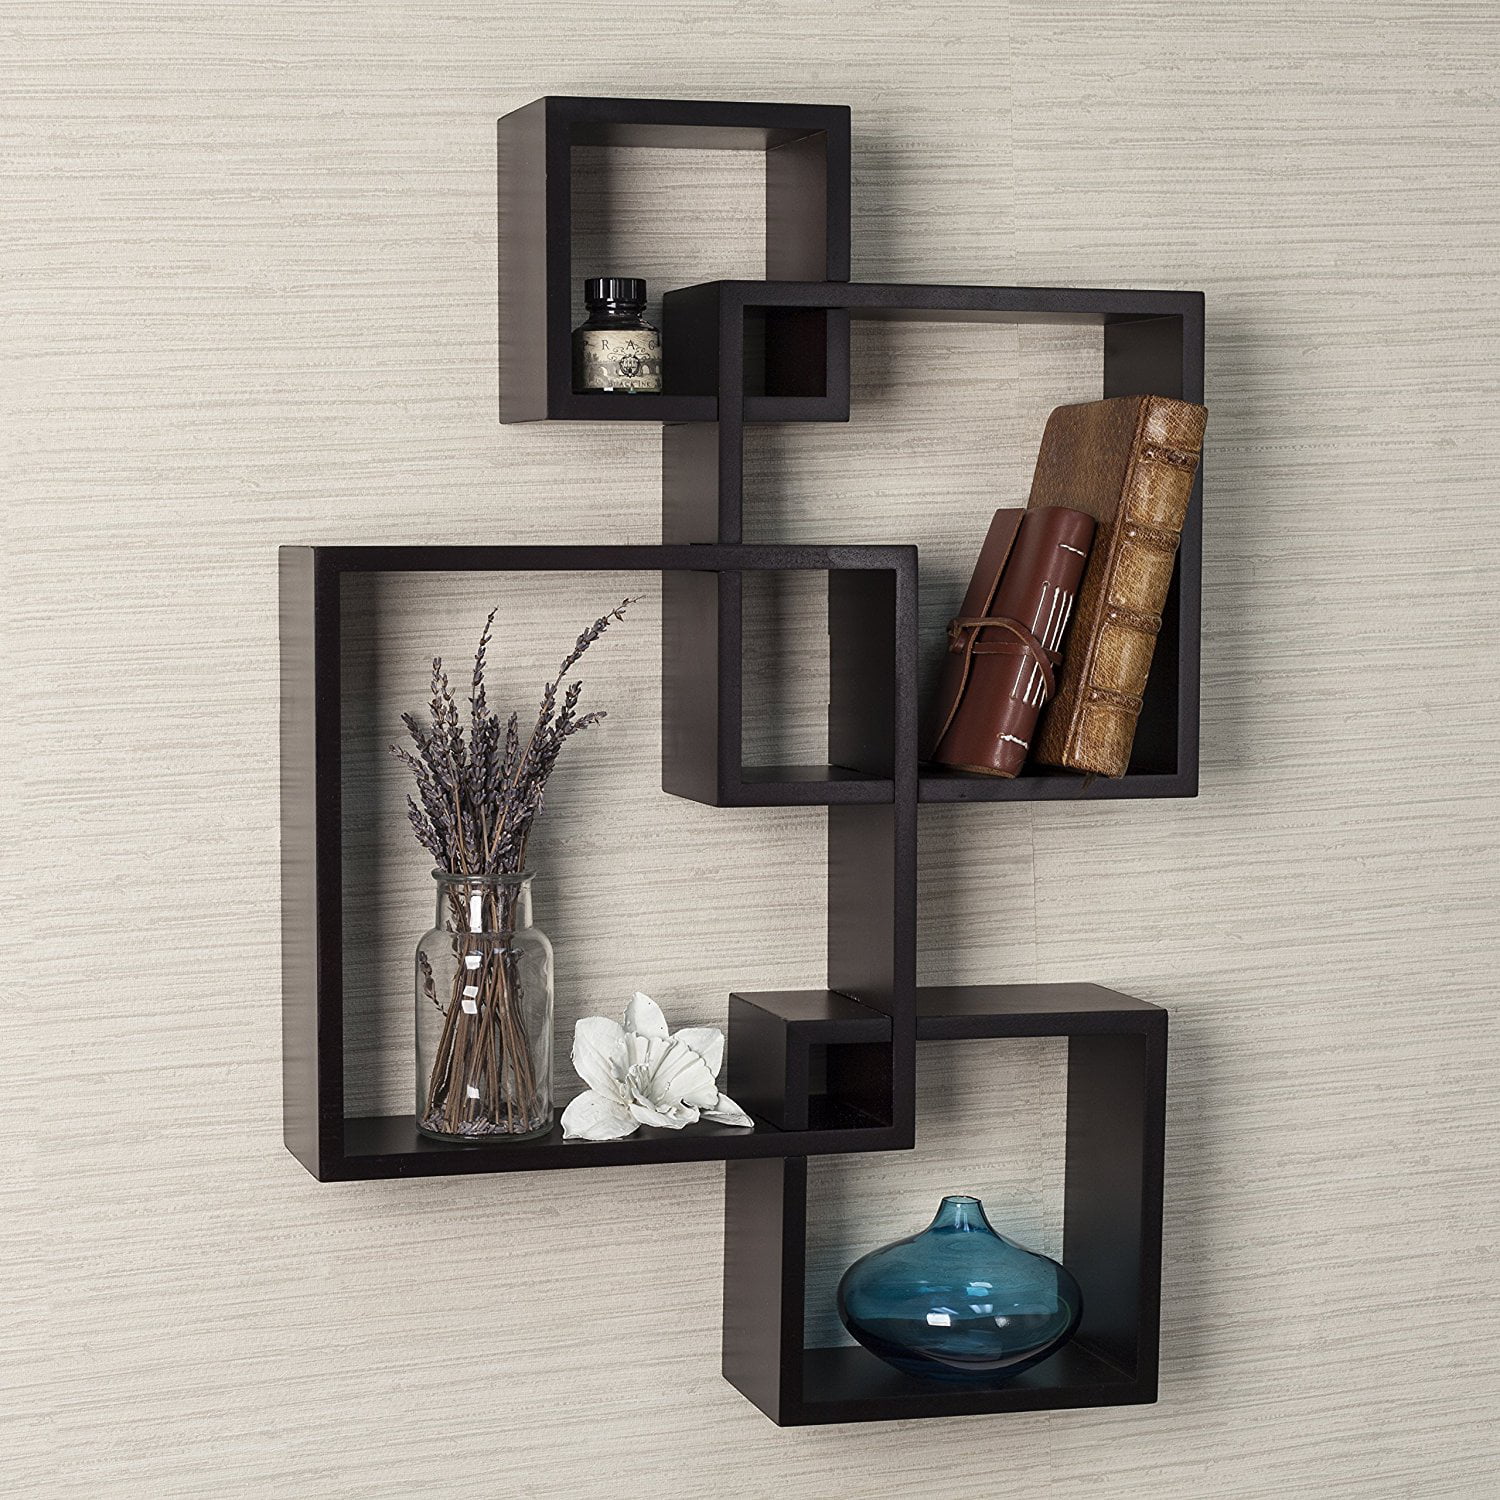 Details about   Set of 3 Floating Display Ledge Bookshelf Wall Mount Storage Shelves Home Decor 